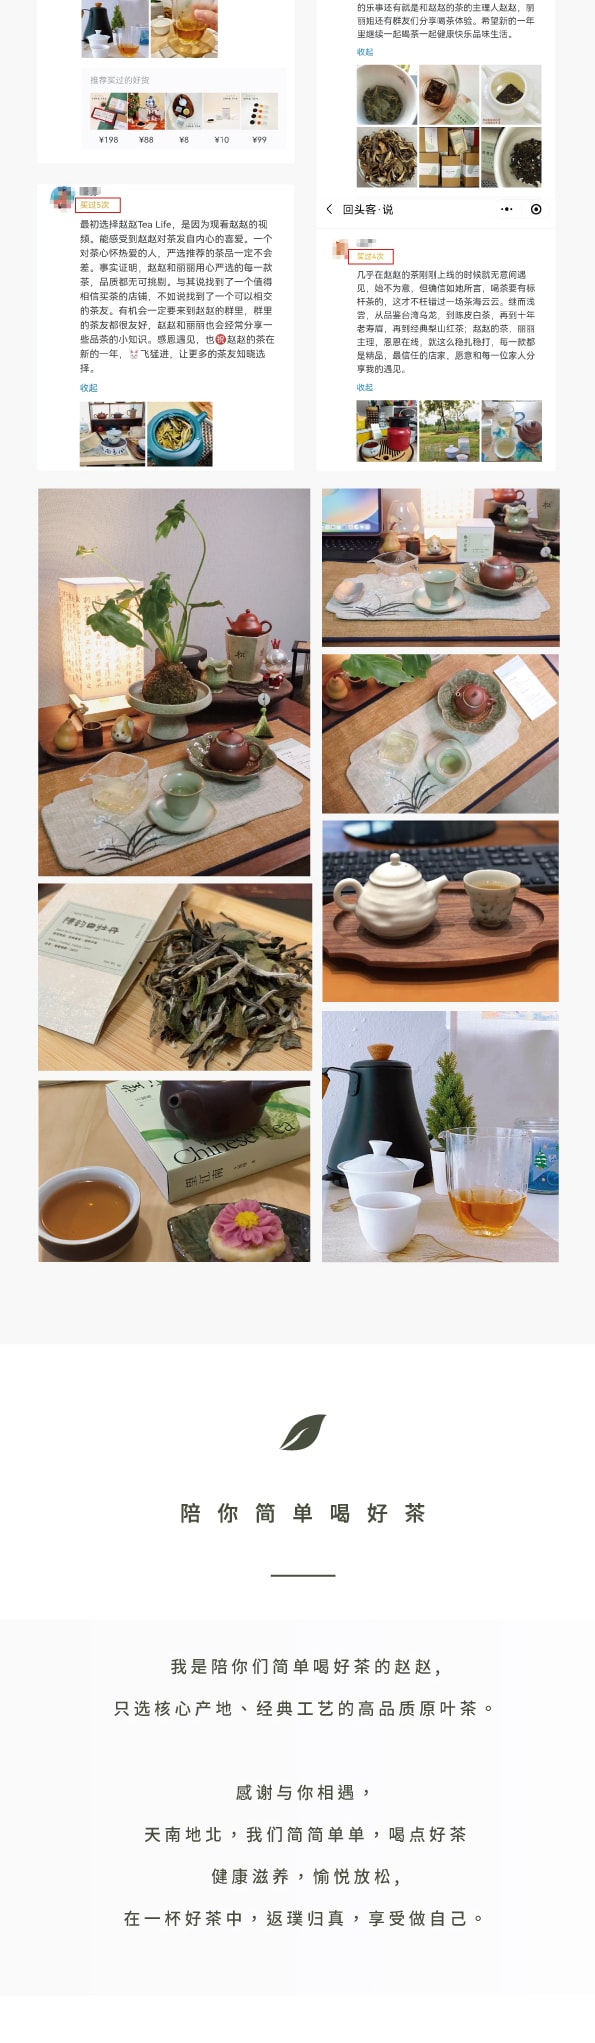 ZhaoTea 茉莉白毫 经典福州茉莉花茶 茶汤鲜灵满芬芳 茶叶 茶饮 花茶 60g